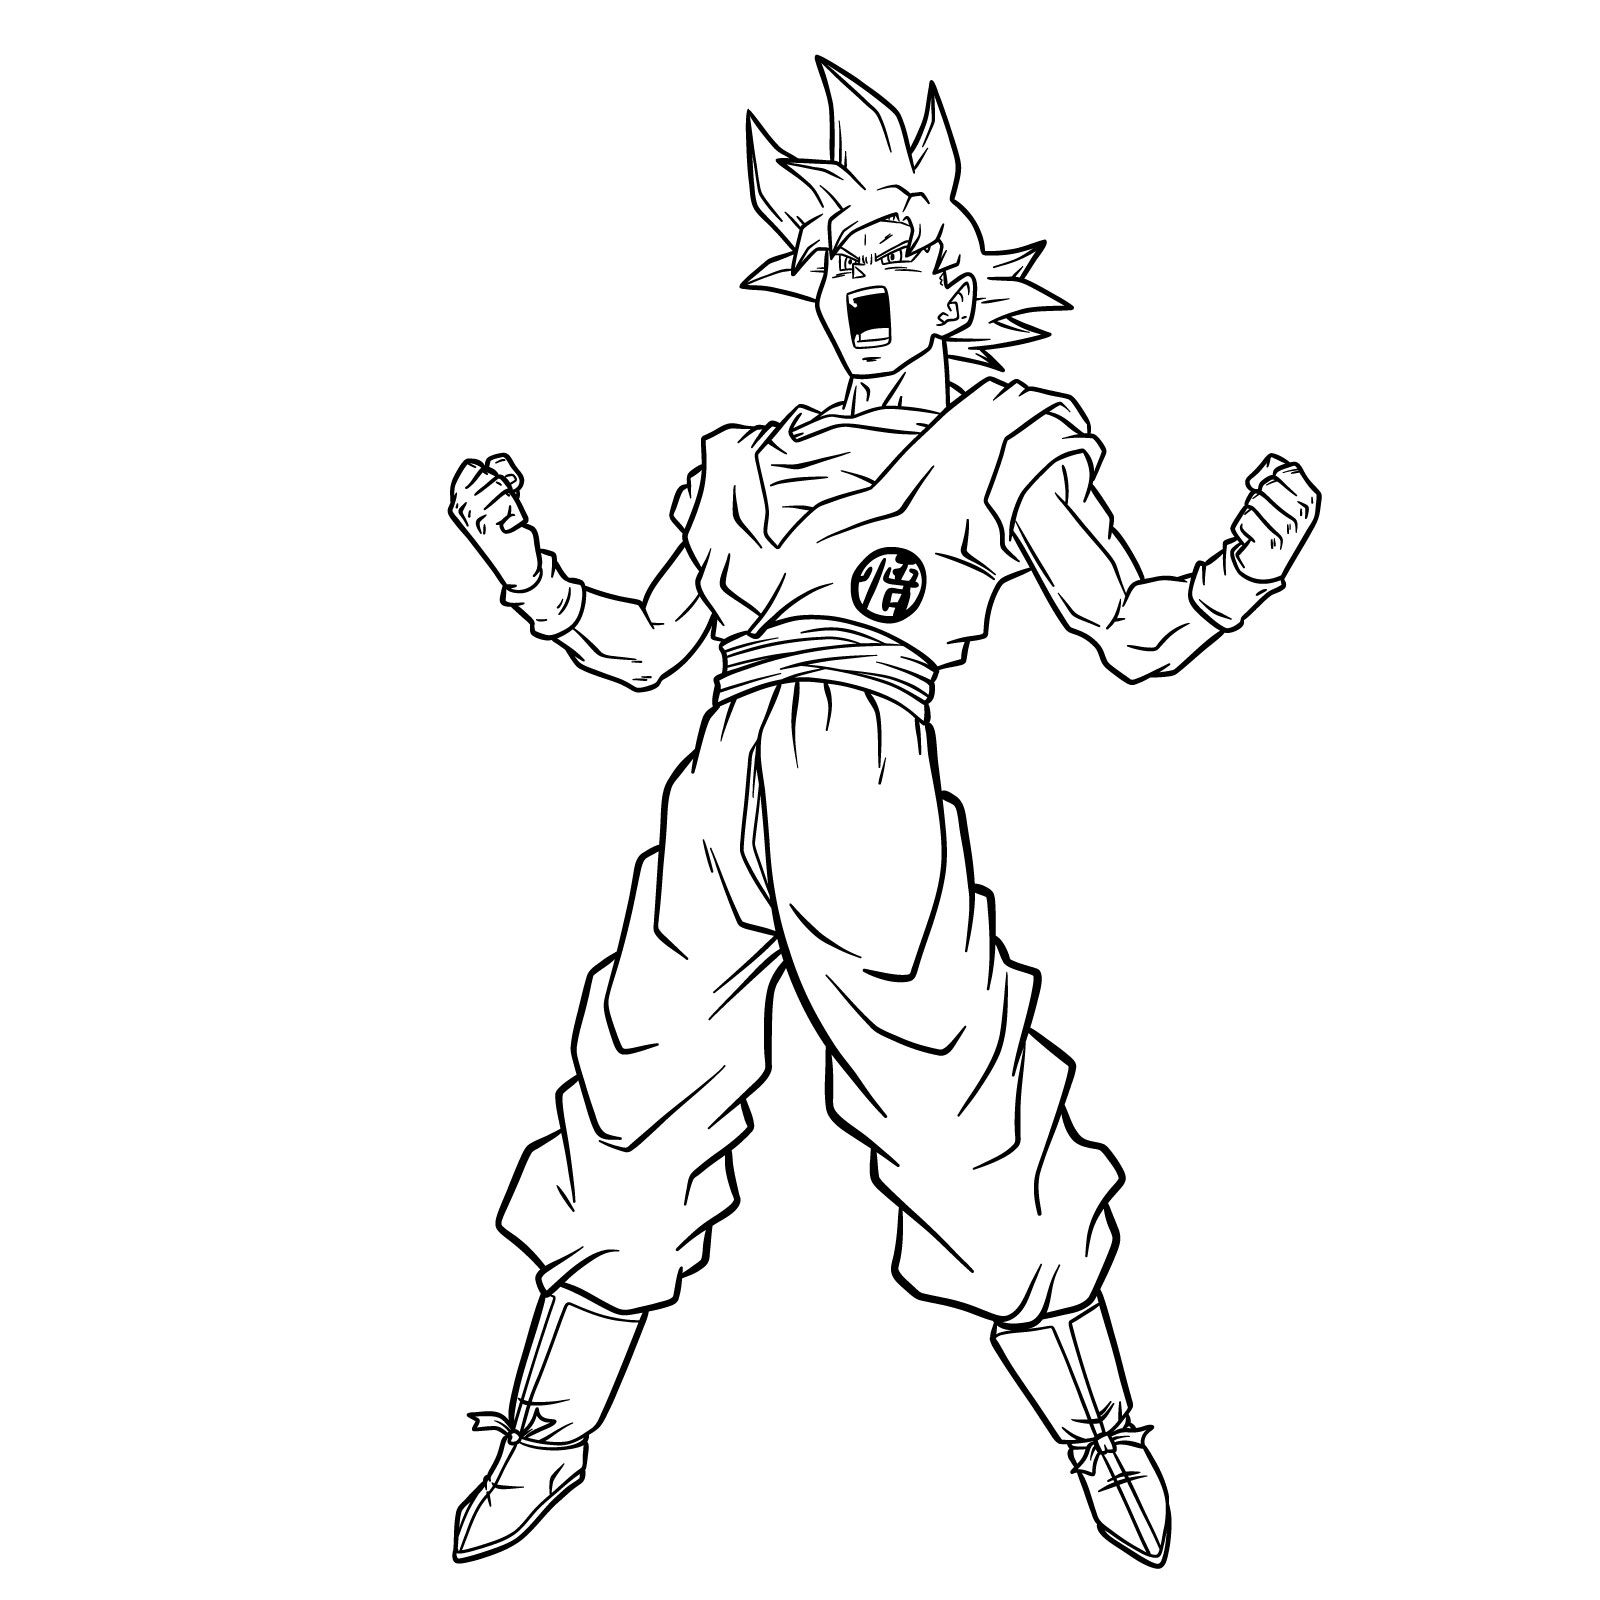 Easy step-by-step drawing of Goku in Super Saiyan God 2 form